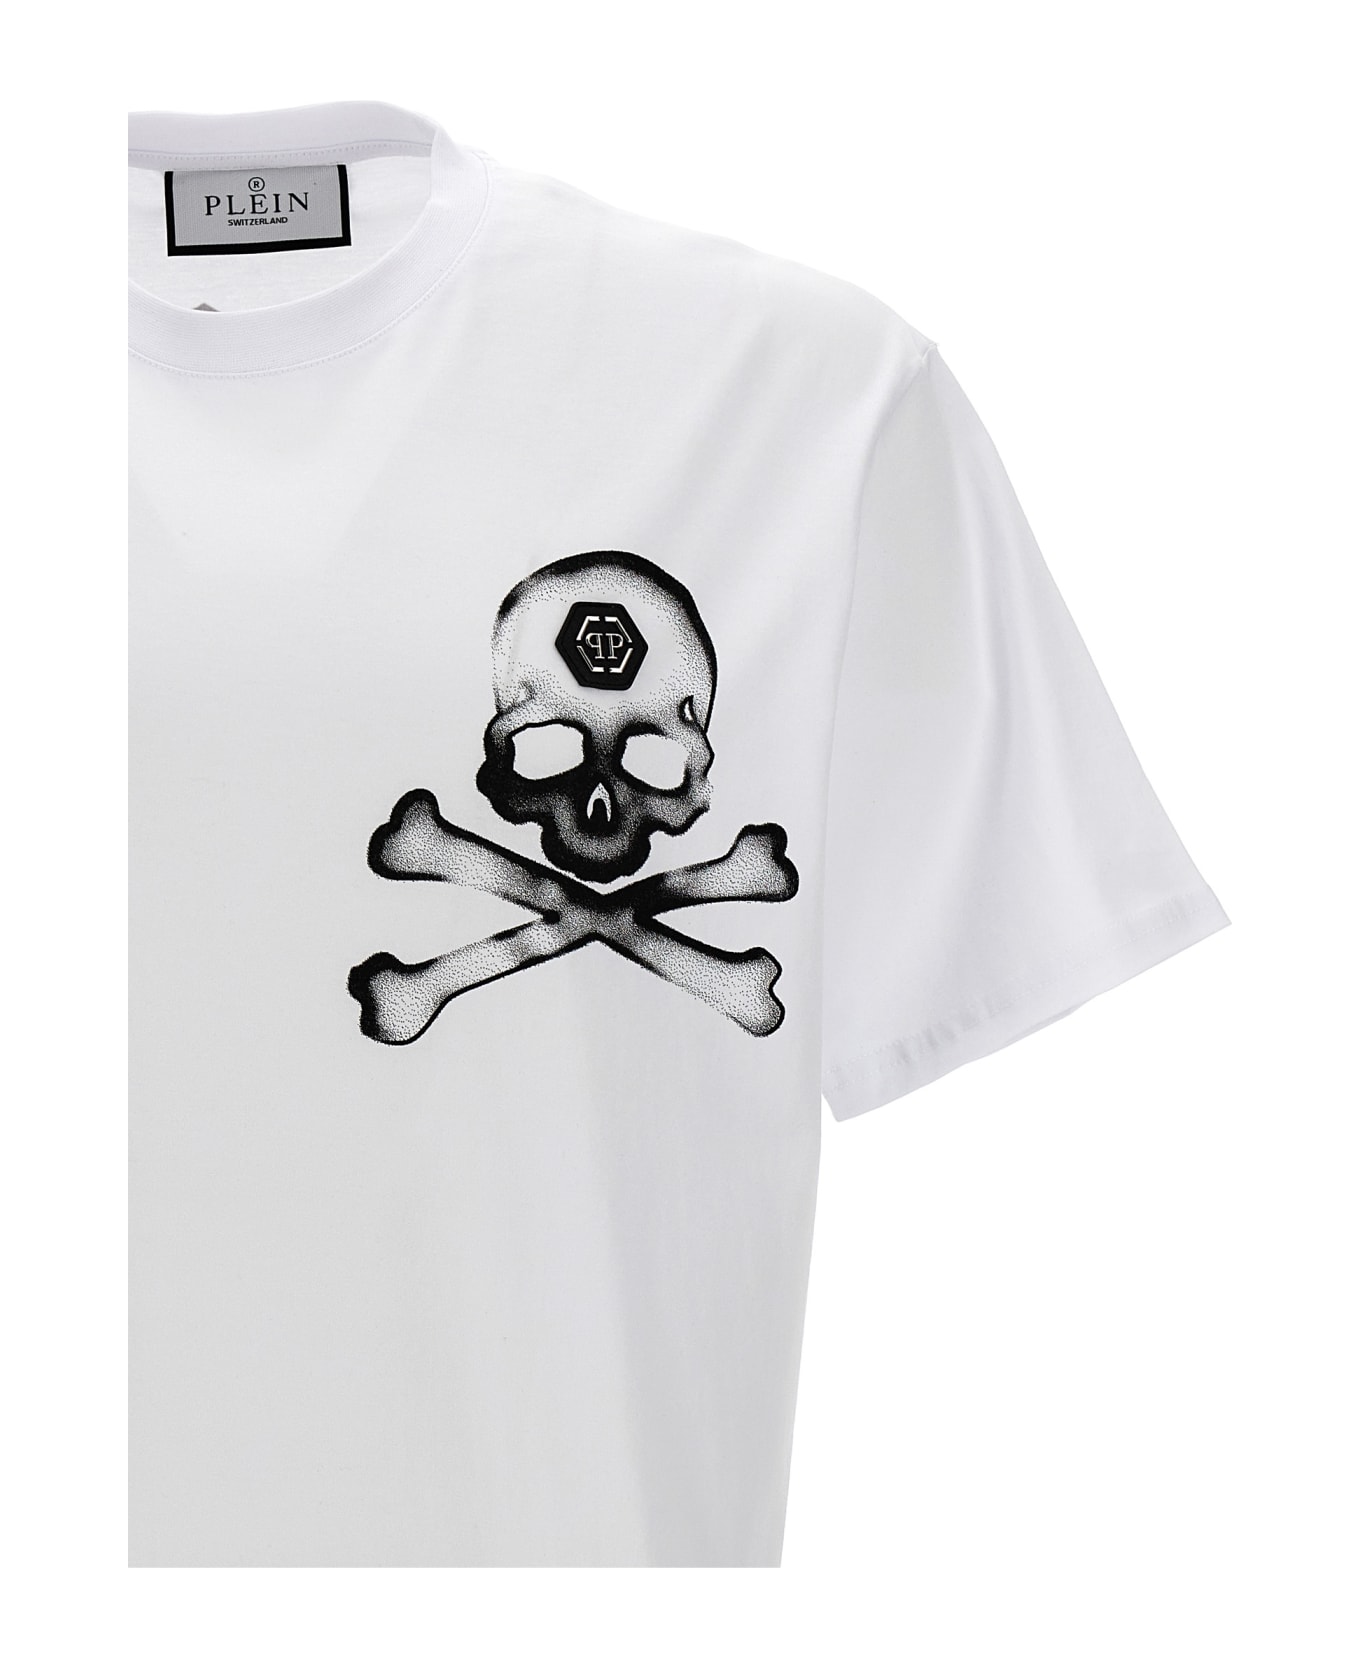 Philipp Plein 'gothic Plein' T-shirt - White/Black